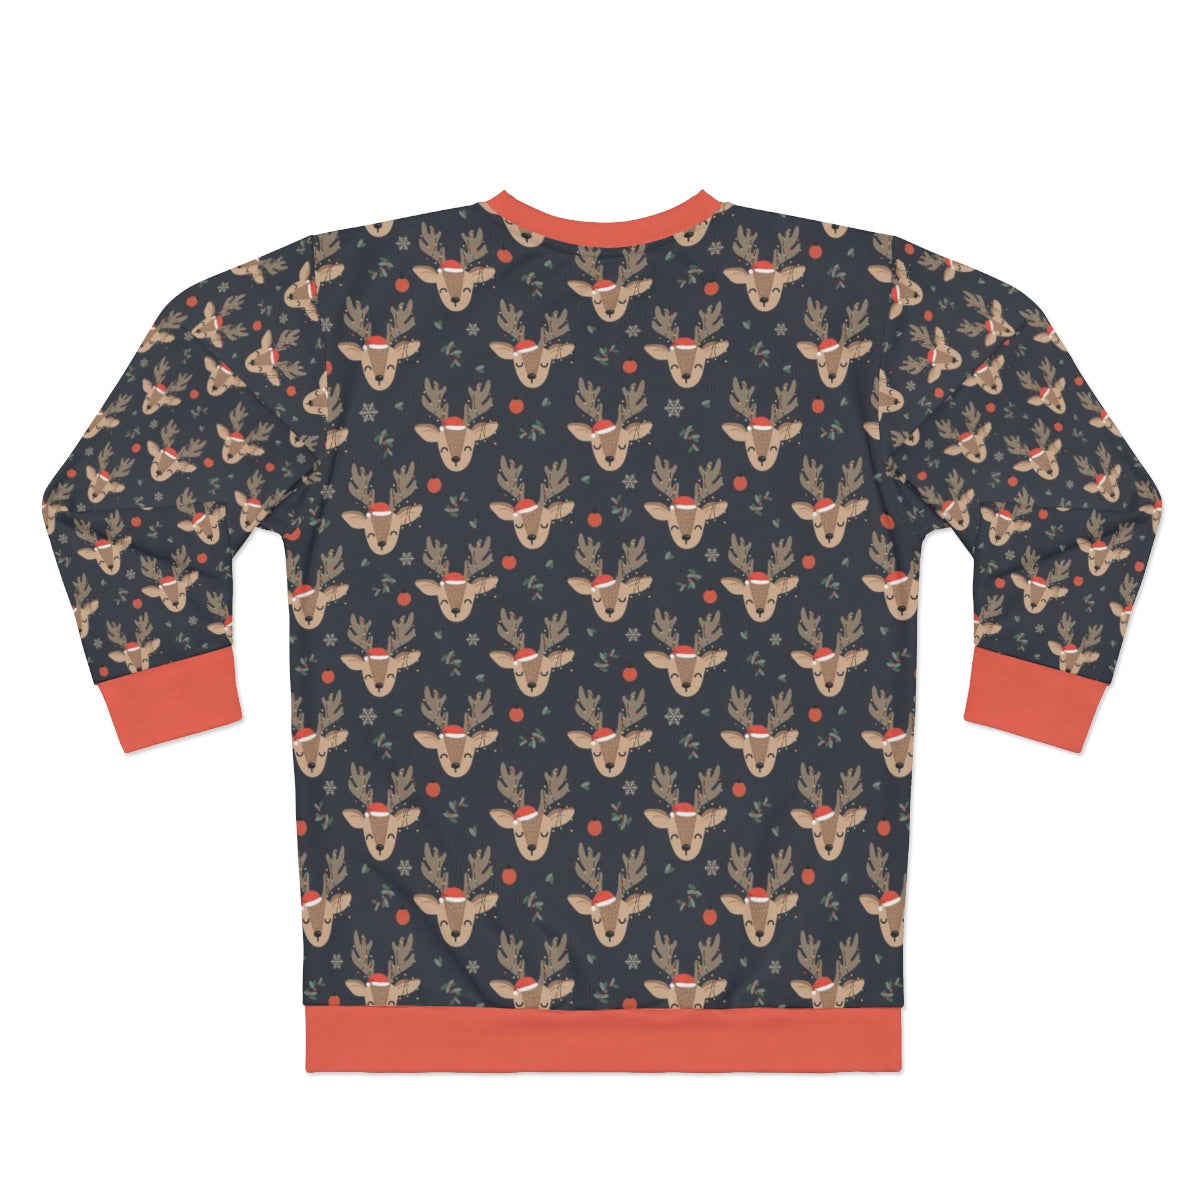 Vintage Reindeer Sweater, Navy Sweatshirt Animal Print Party Holiday December Merry Xmas Men Women Gift Starcove Fashion